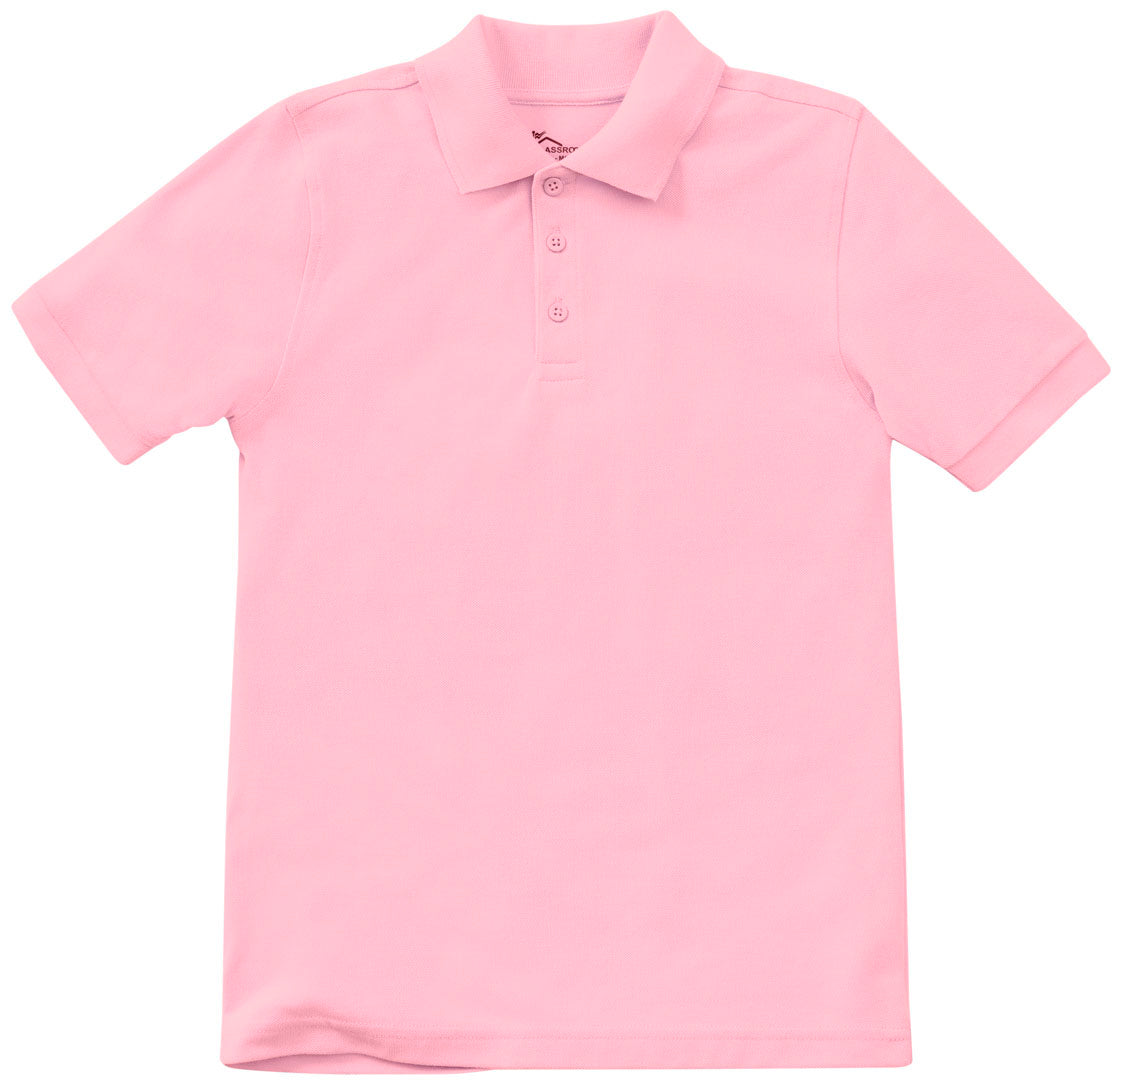 Sudbrook Short Sleeve Golf Shirt - Youth